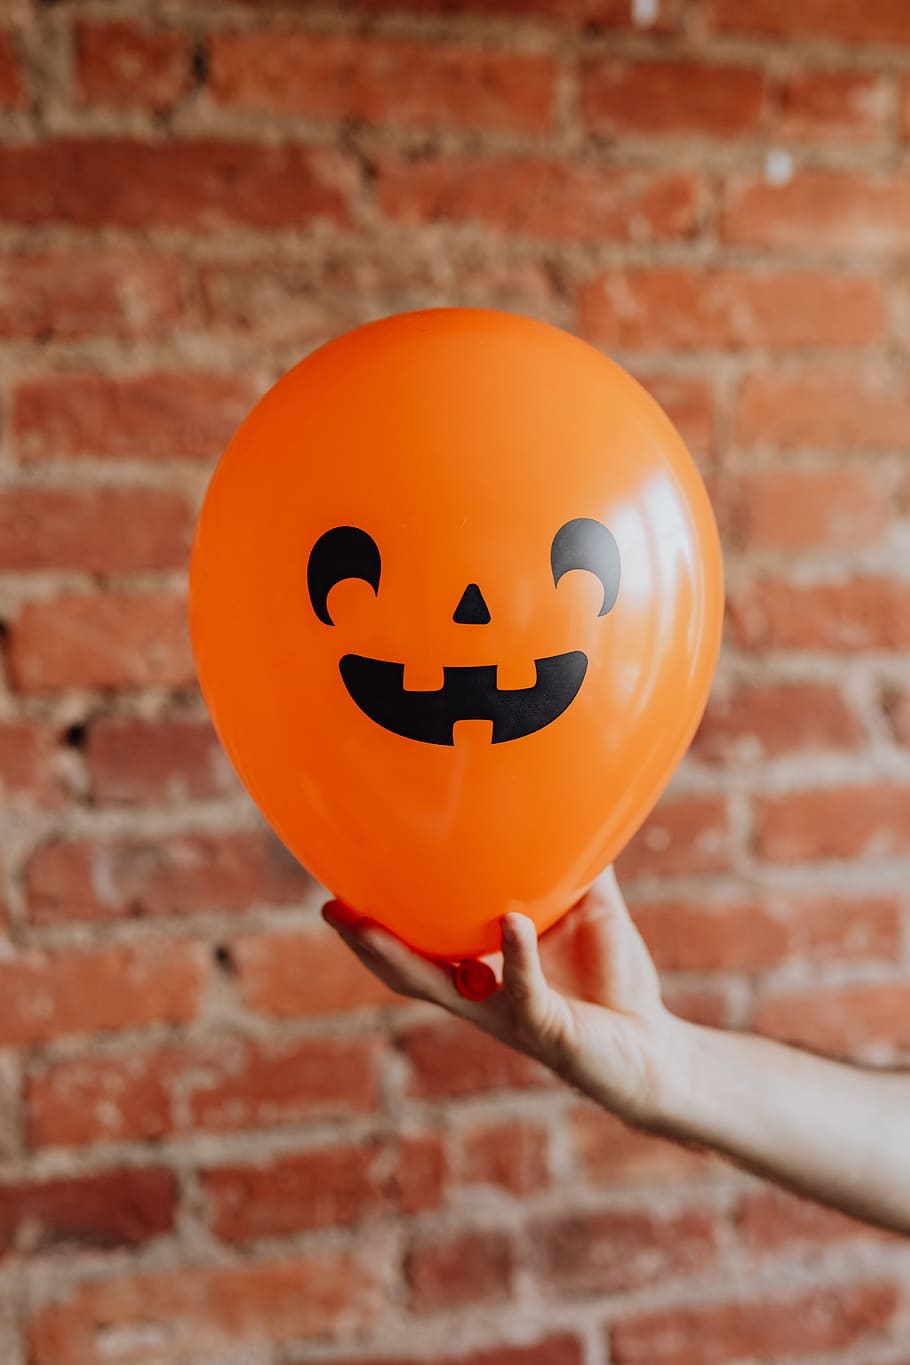 balloon, orange, face, funny, autumn, man, Halloween, anthropomorphic face, wall, brick